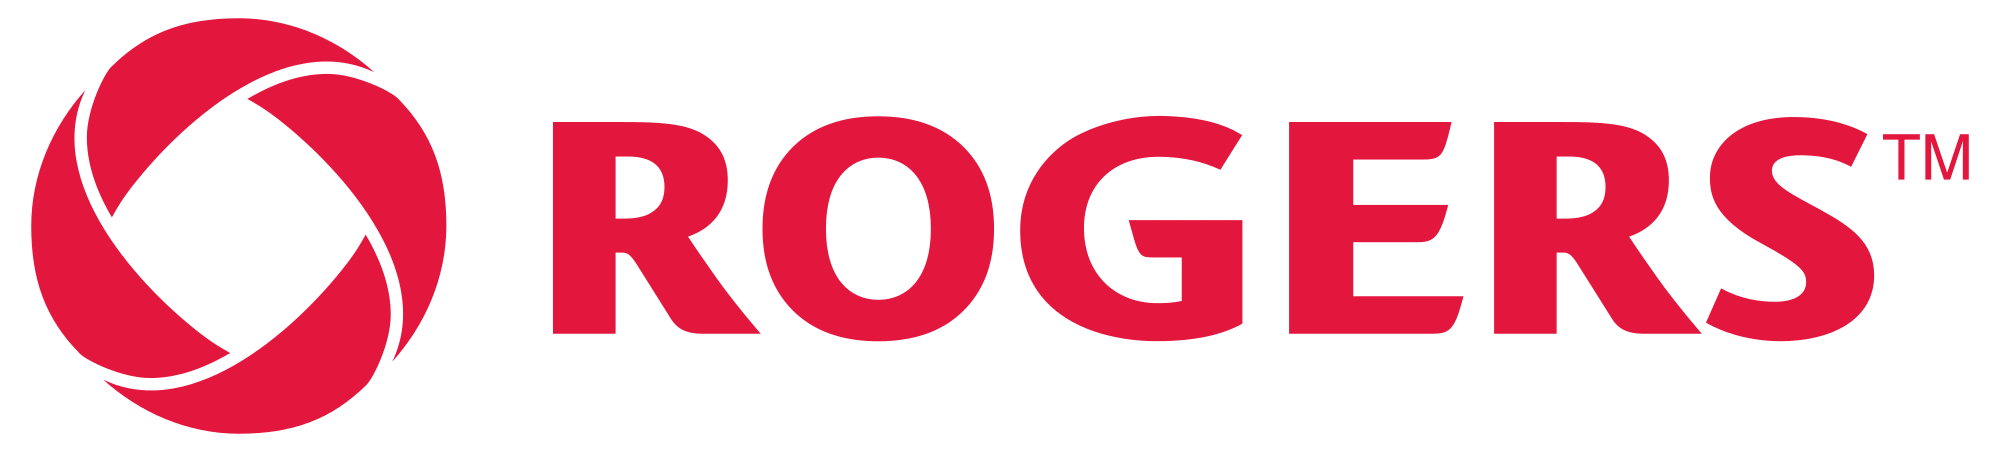 Rogers_logo.svg